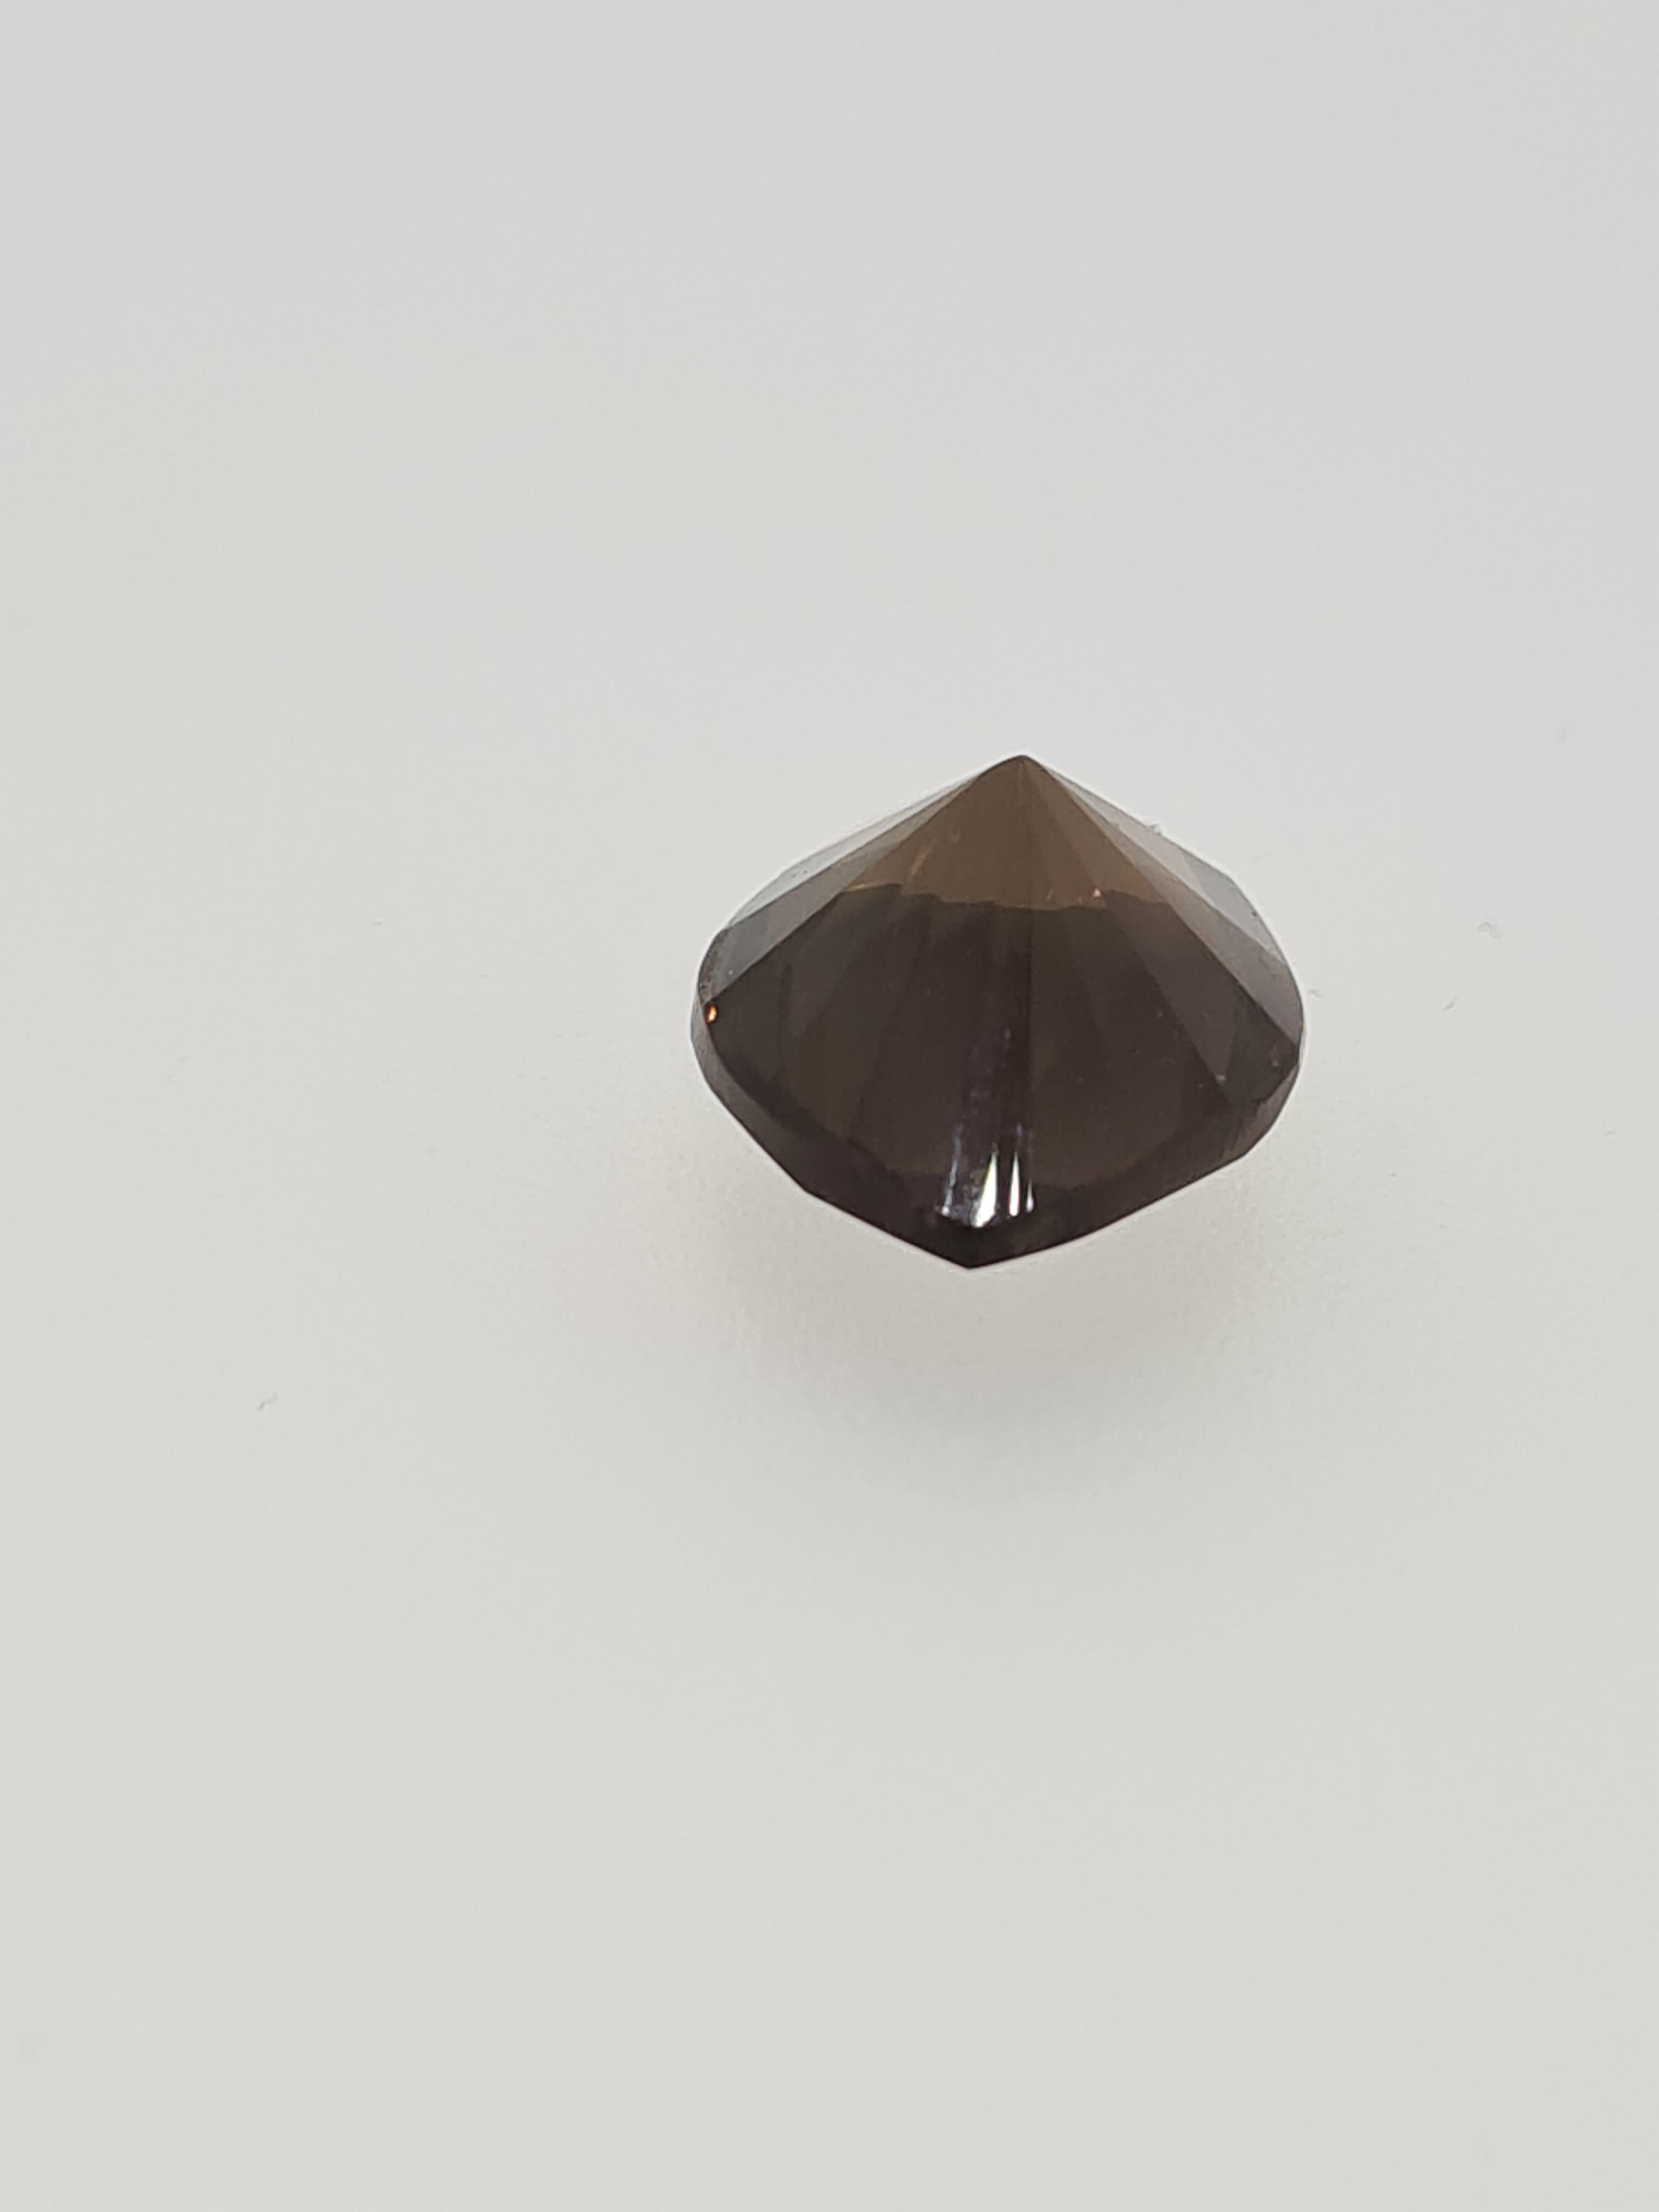 Smokey quartz marquise cut gem stone - Image 3 of 5